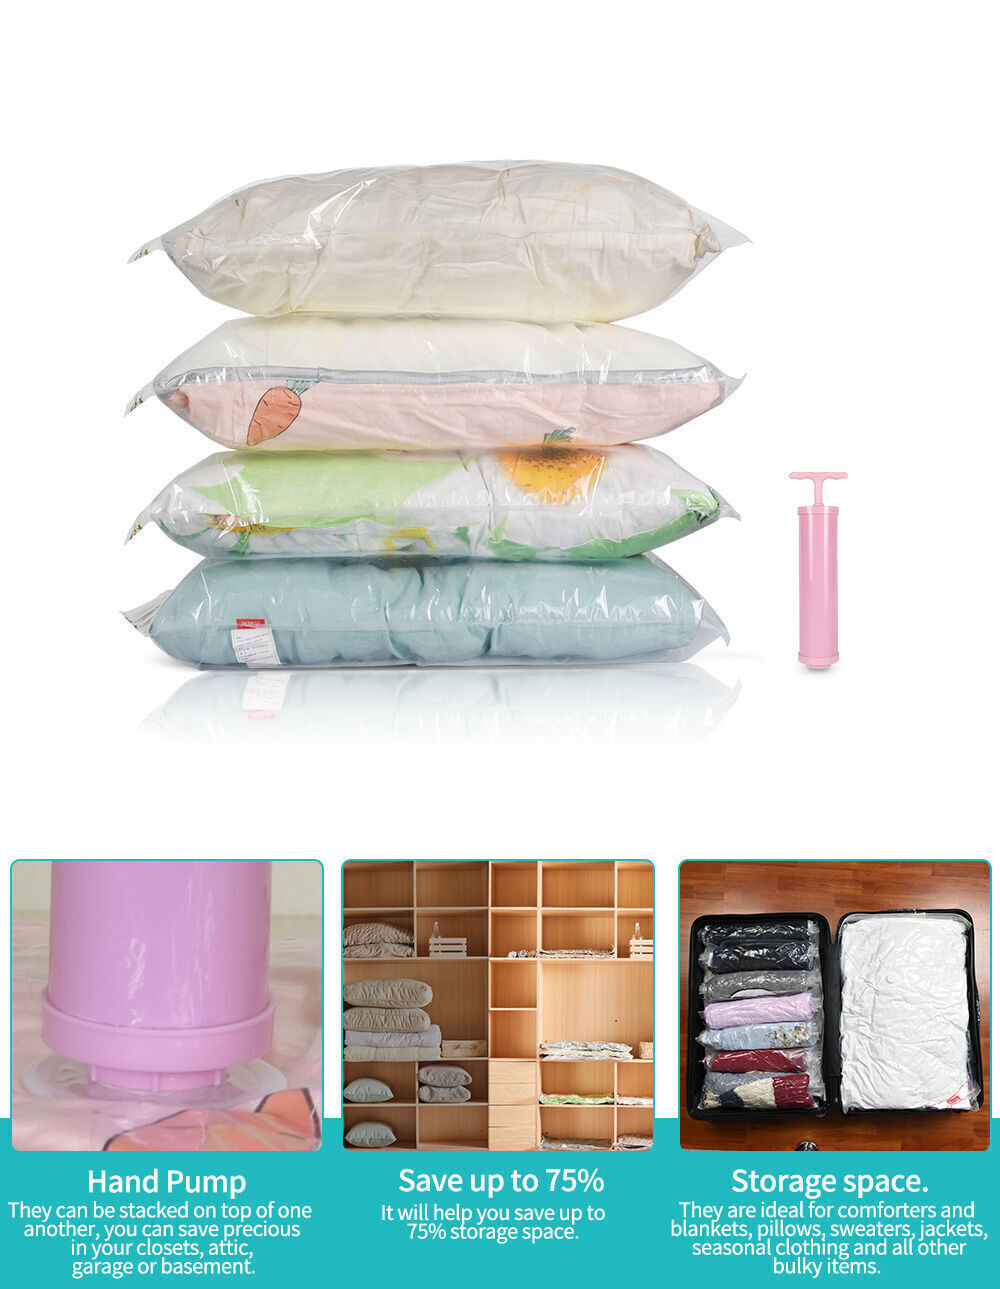 Eco-Friendly Resealable Space Saver Vacuum Storage Bag Wholesale